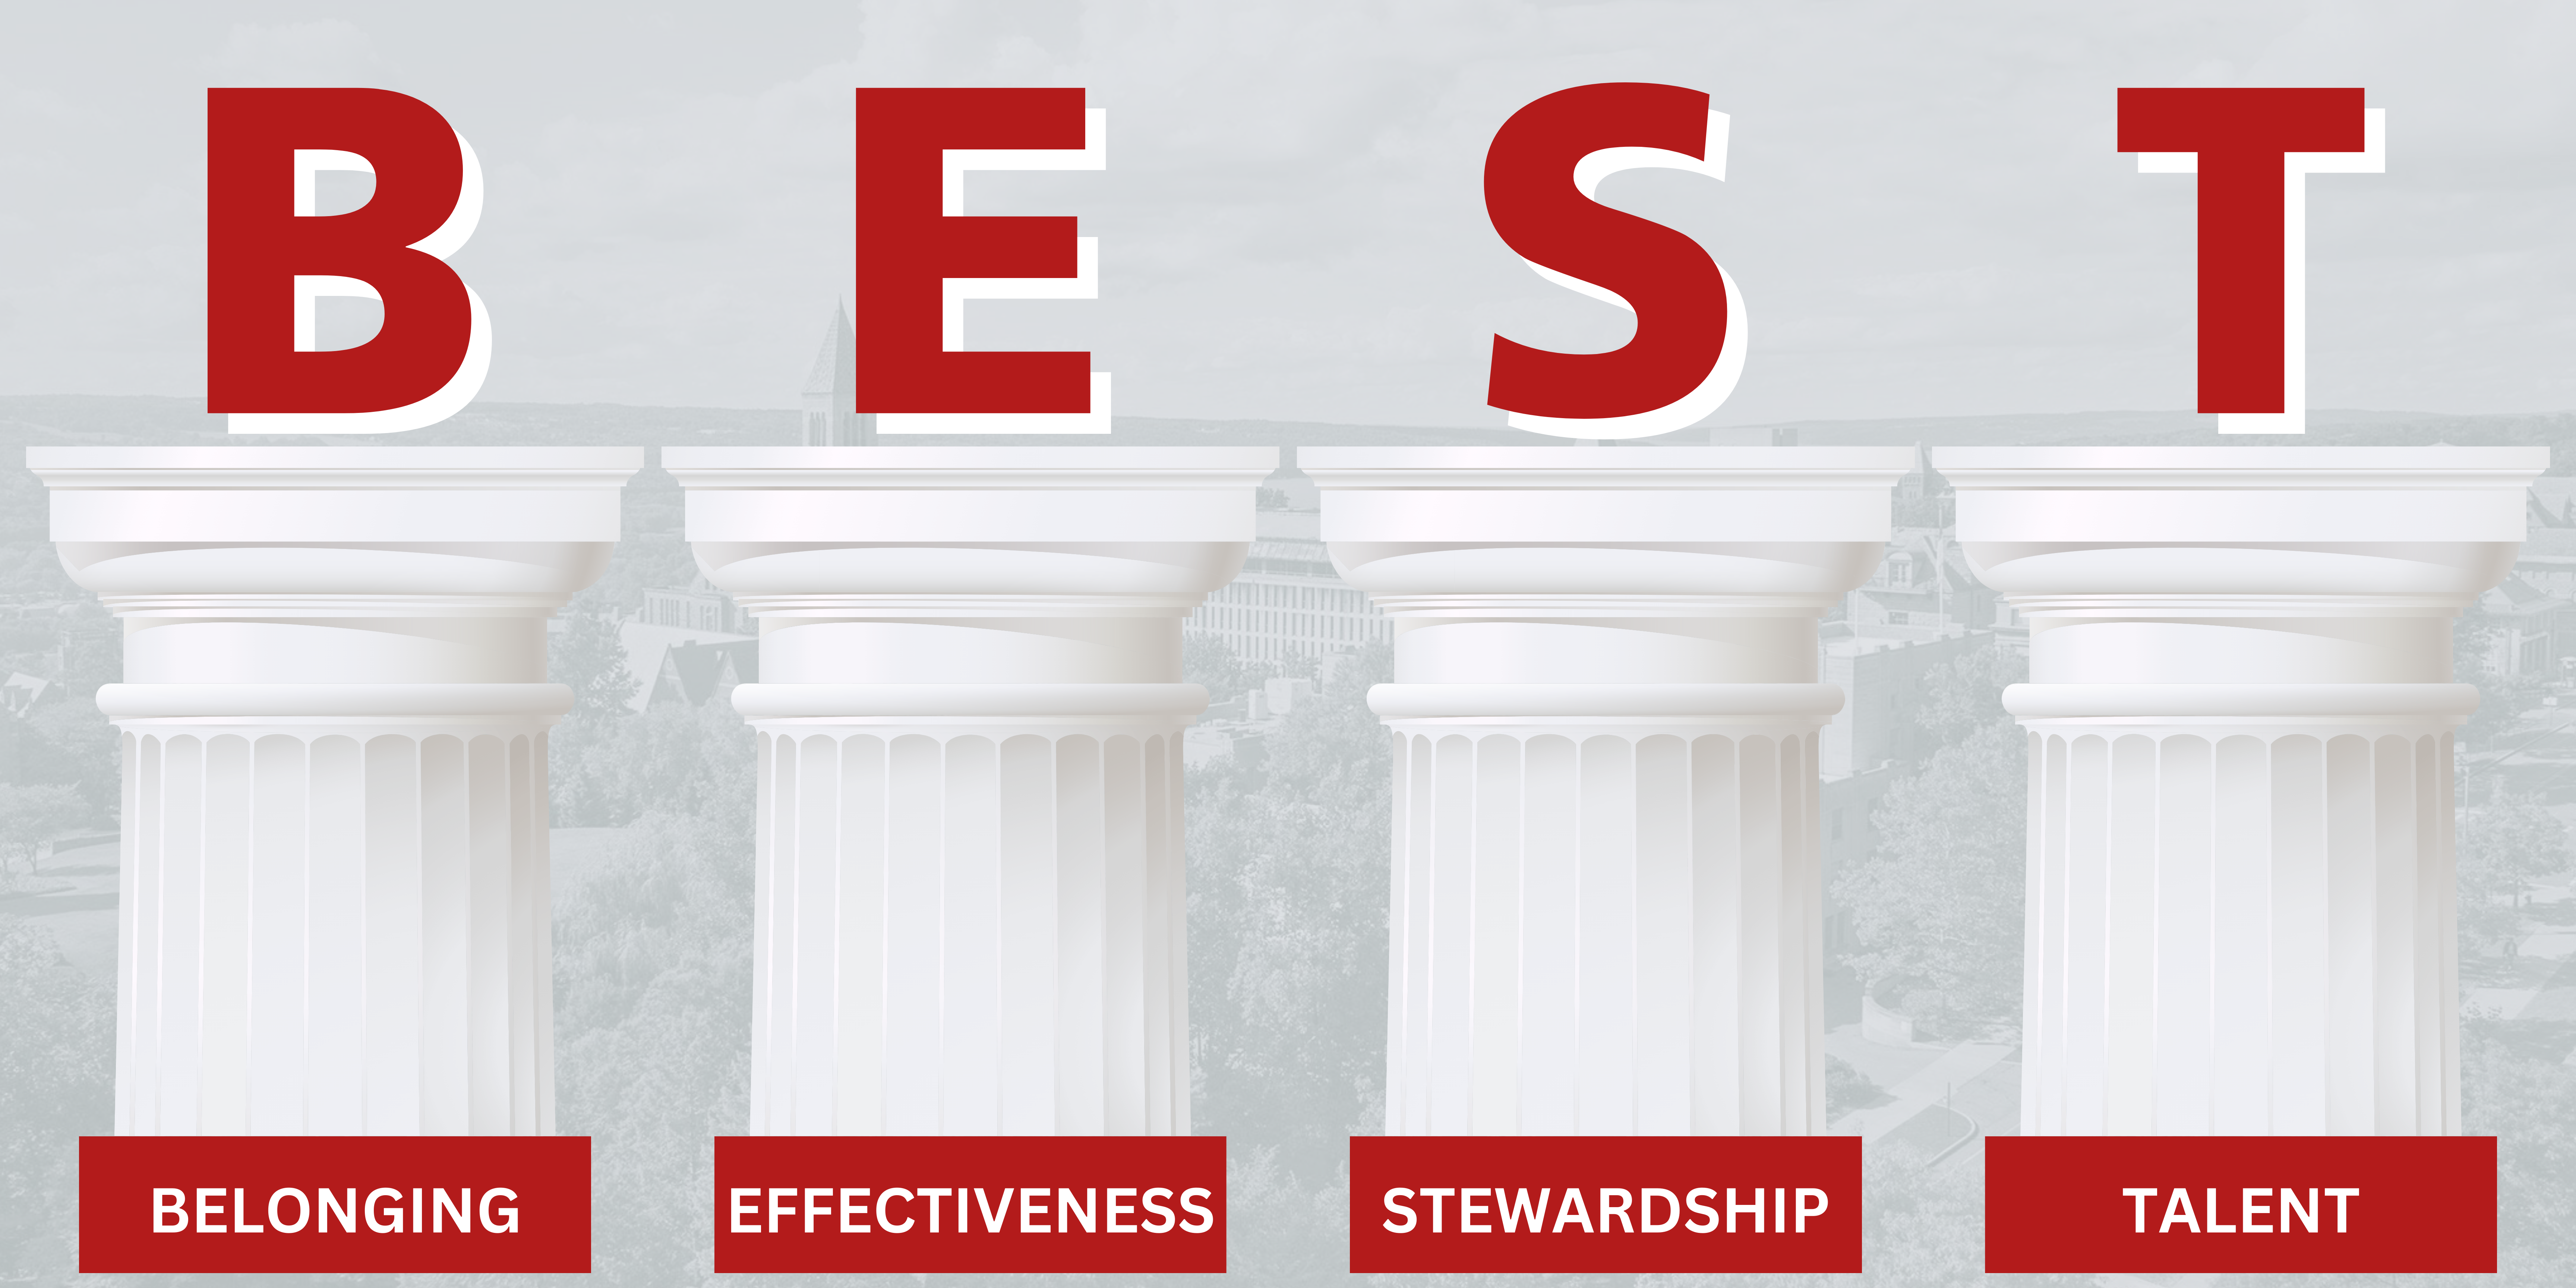 diagram spelling the word "Best" above 4 classical pillars: B = Belonging, E = Effectiveness, S = Stewardship, T = Talent